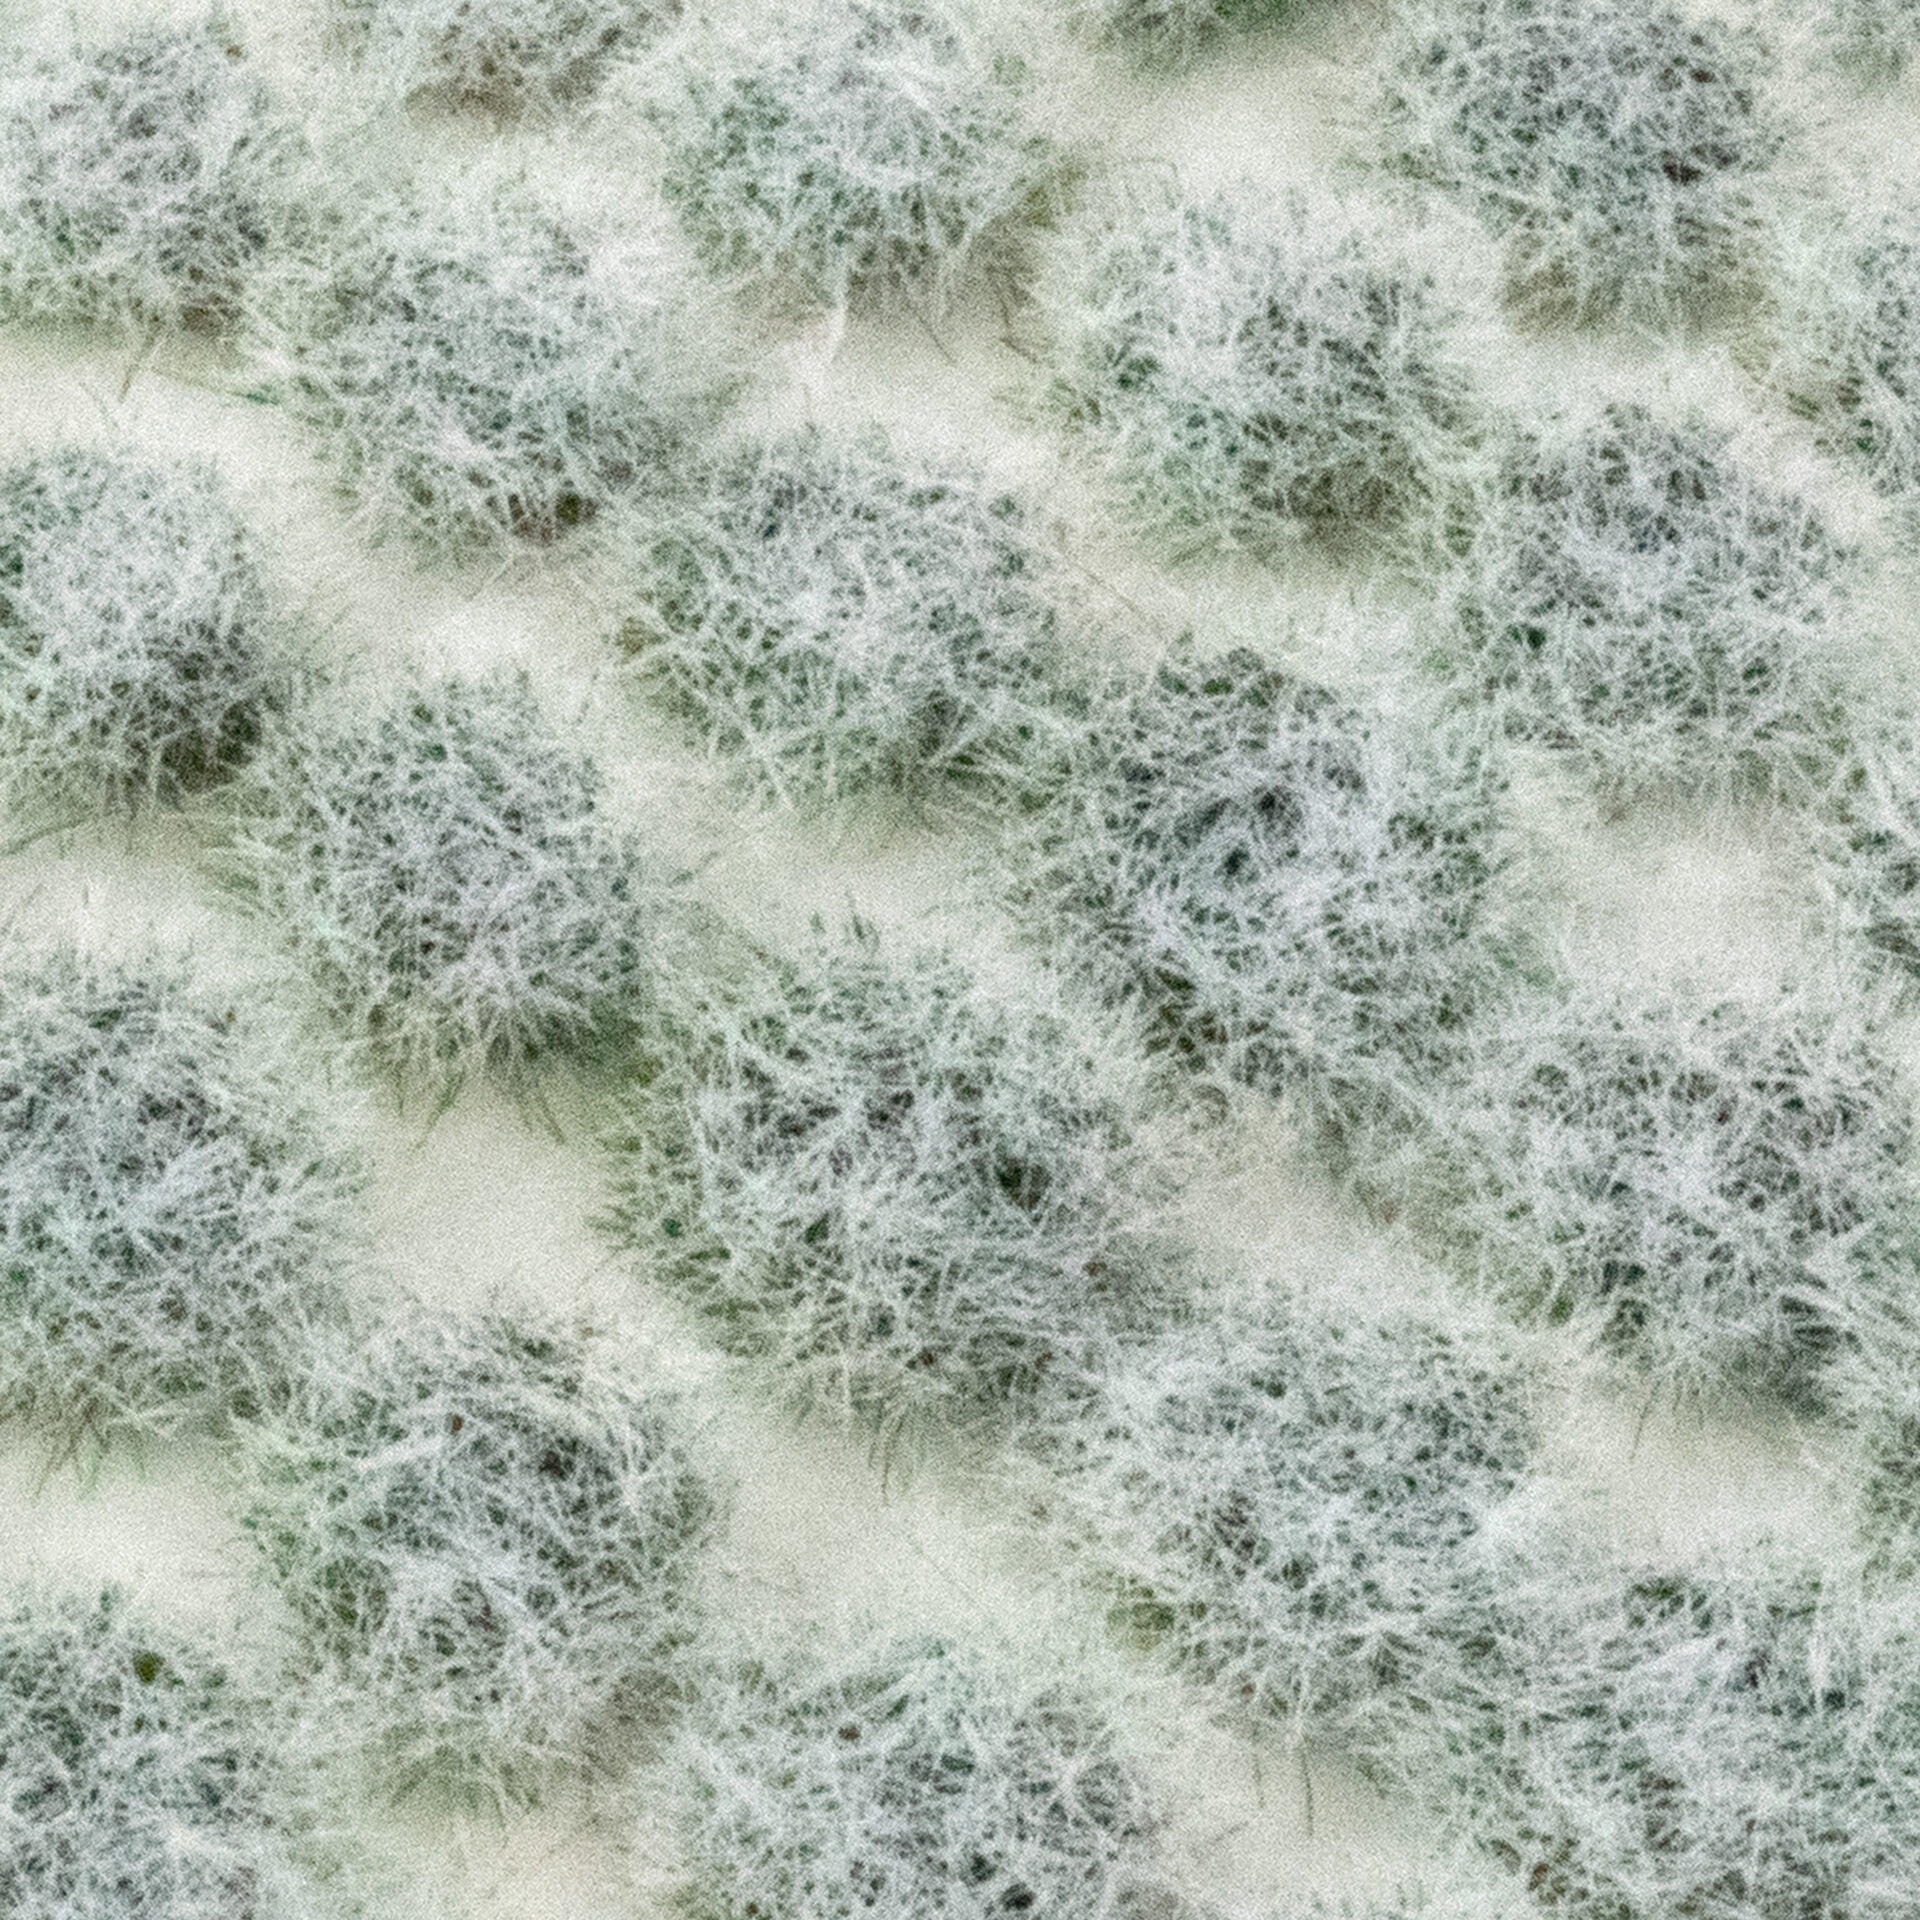 Grass Tuft Model Scenery Railway Snow Icy Winter White Flowers & Bushes Mix